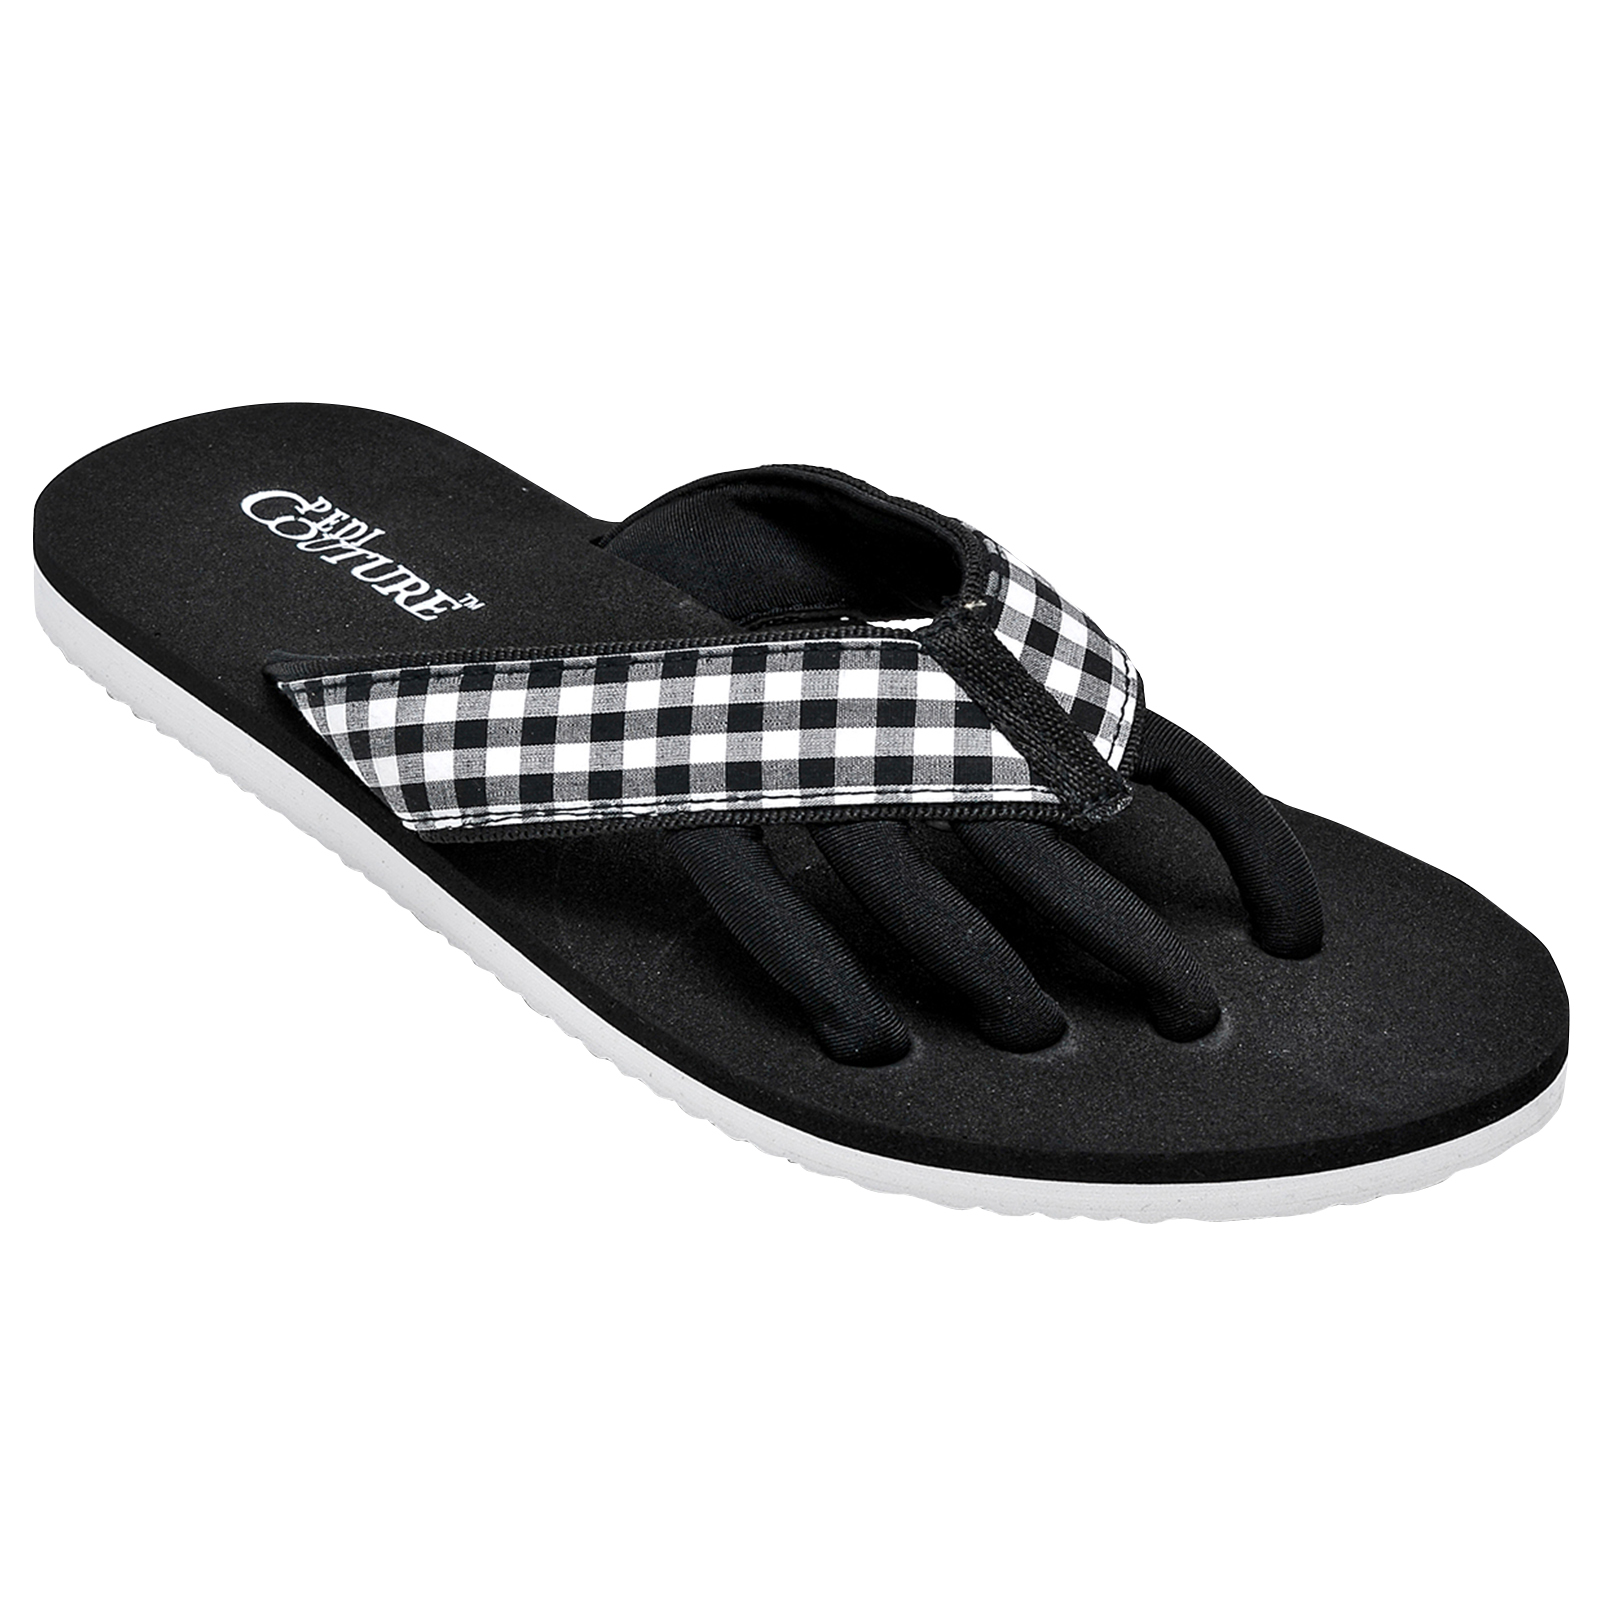 PEDI COUTURE NYHET Gingham Pedicure Spa Toe Separator Sandal för kvinnor